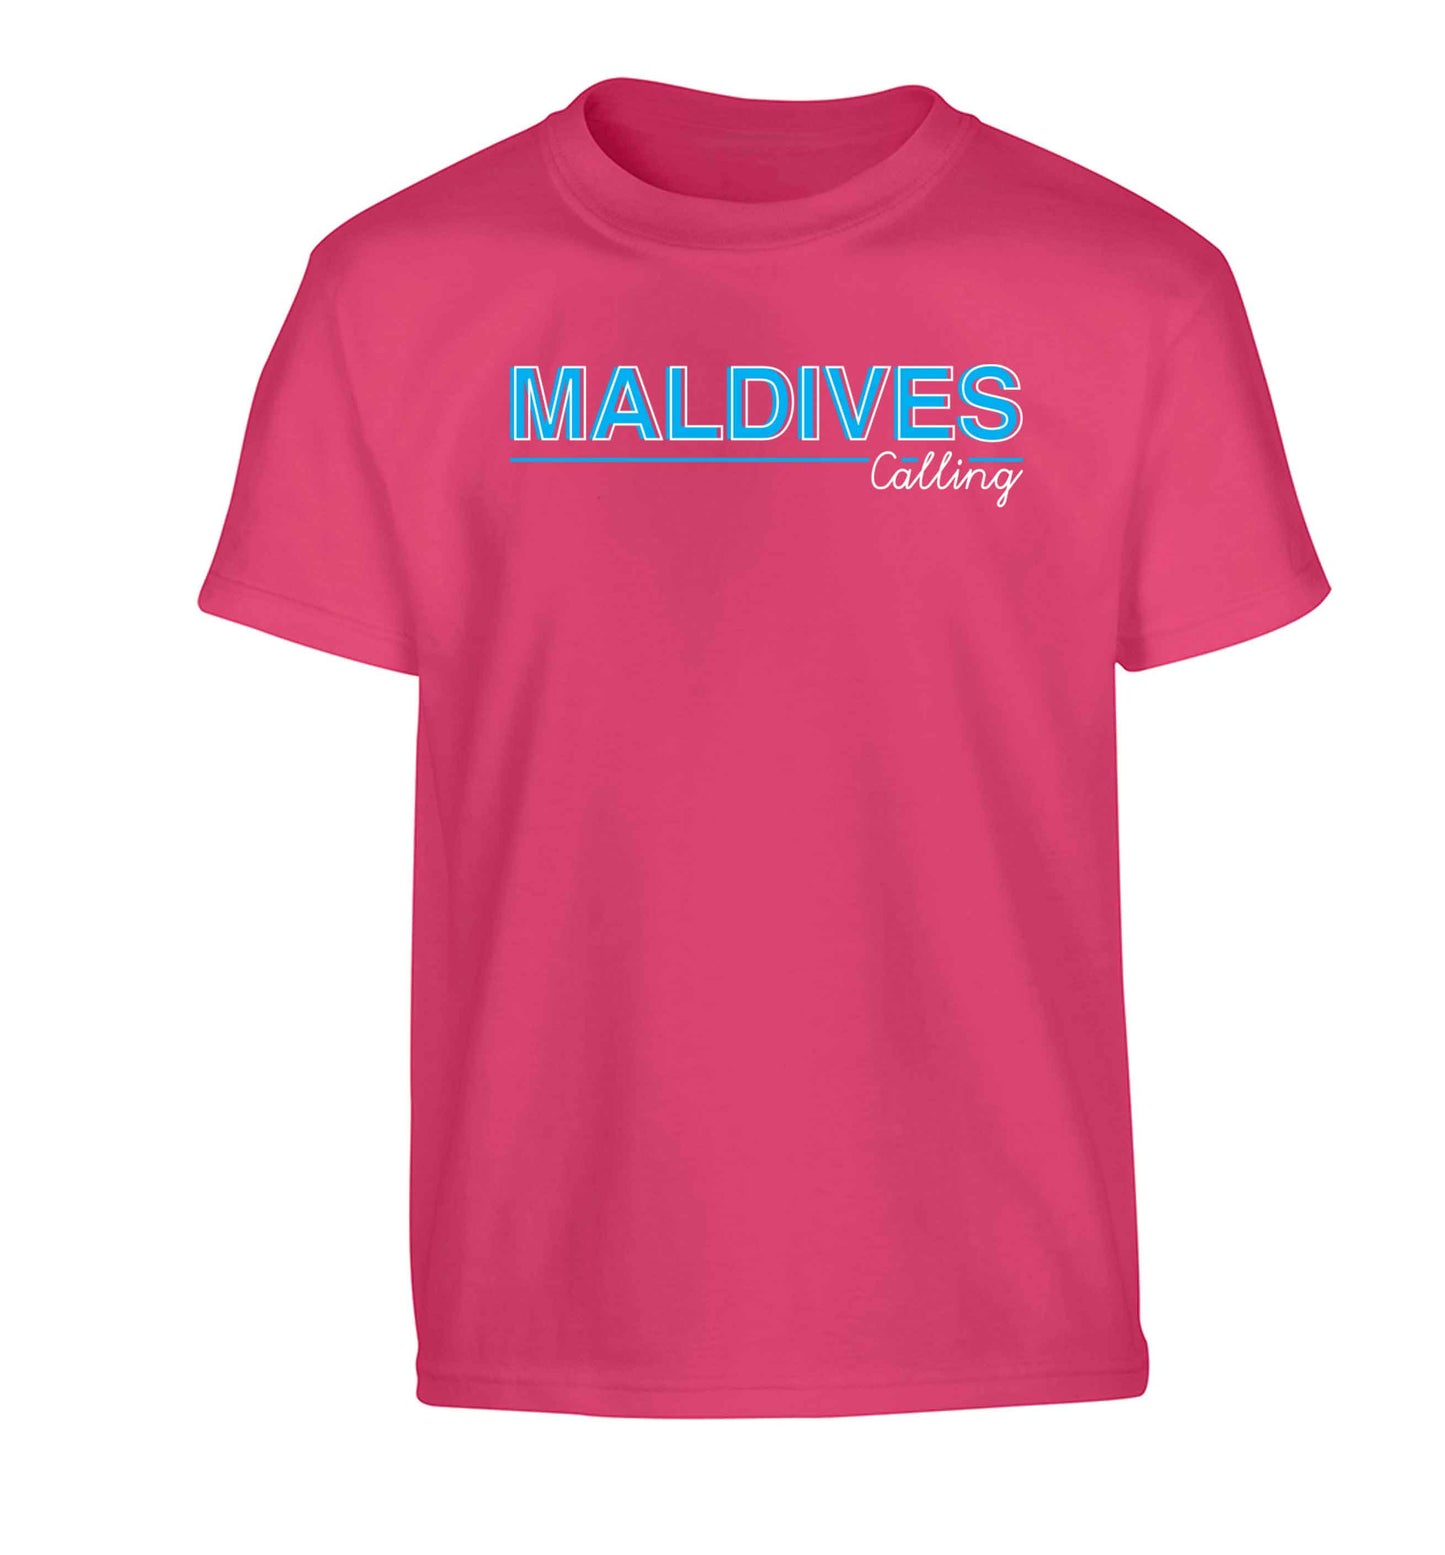 Maldives calling Children's pink Tshirt 12-13 Years